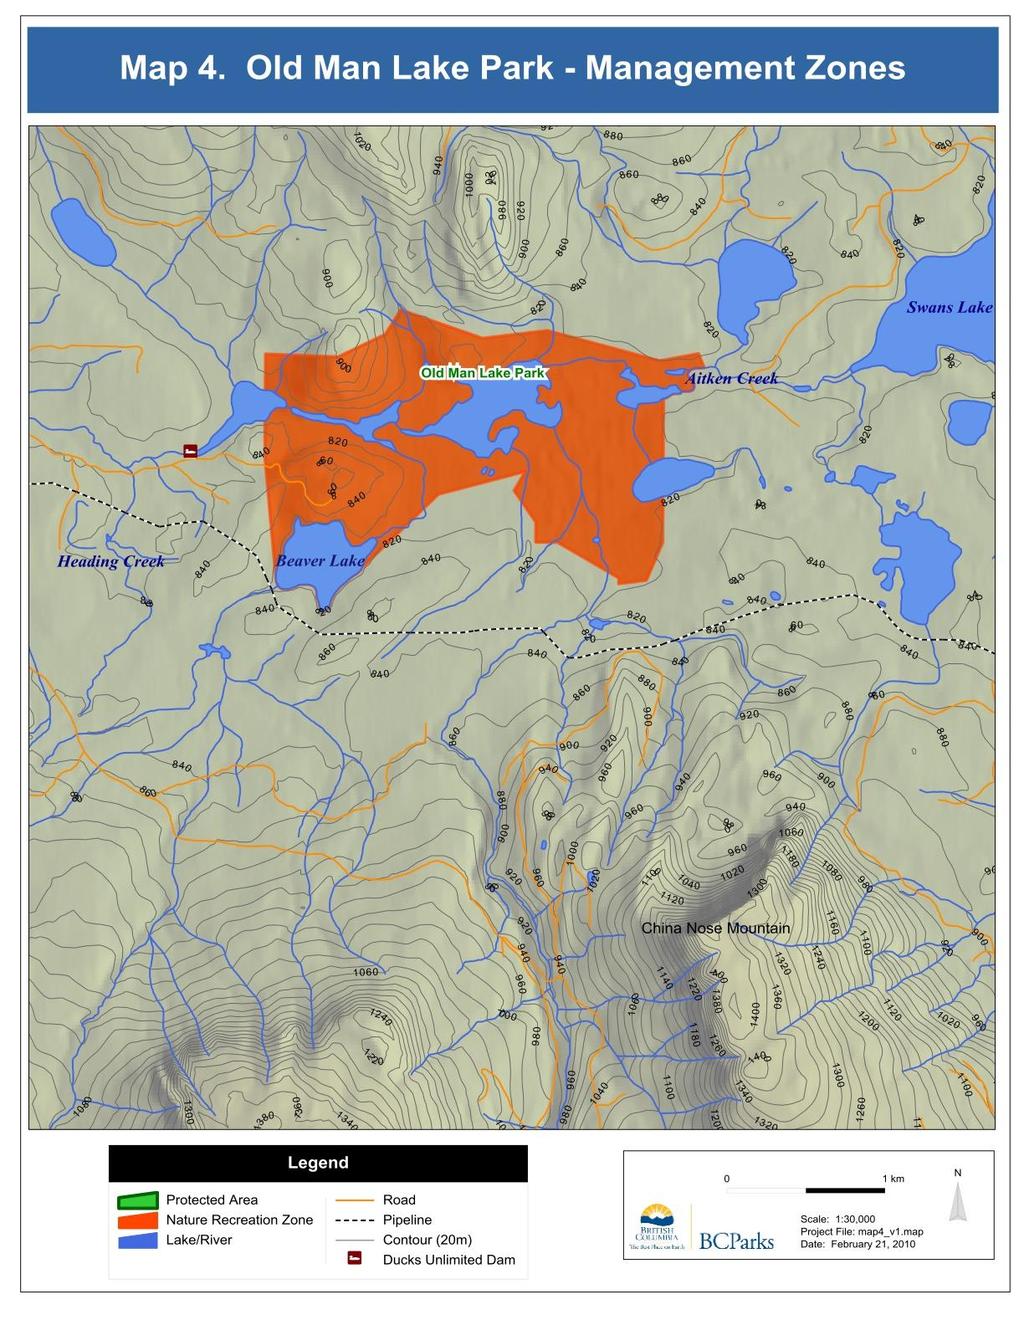 Figure 4: Map 4 Old Man Lake Park Management